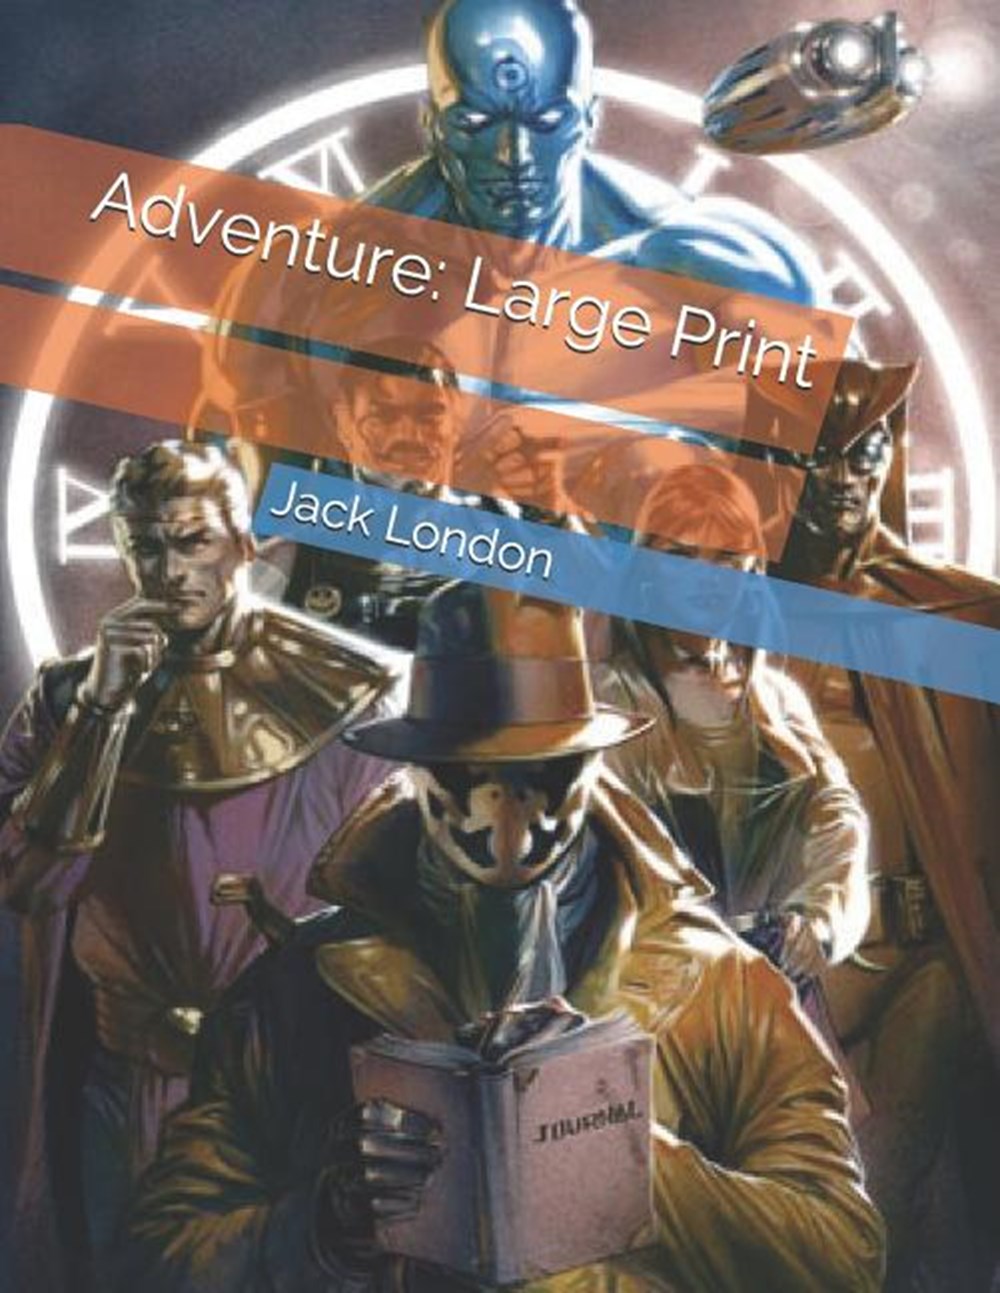 Adventure Large Print